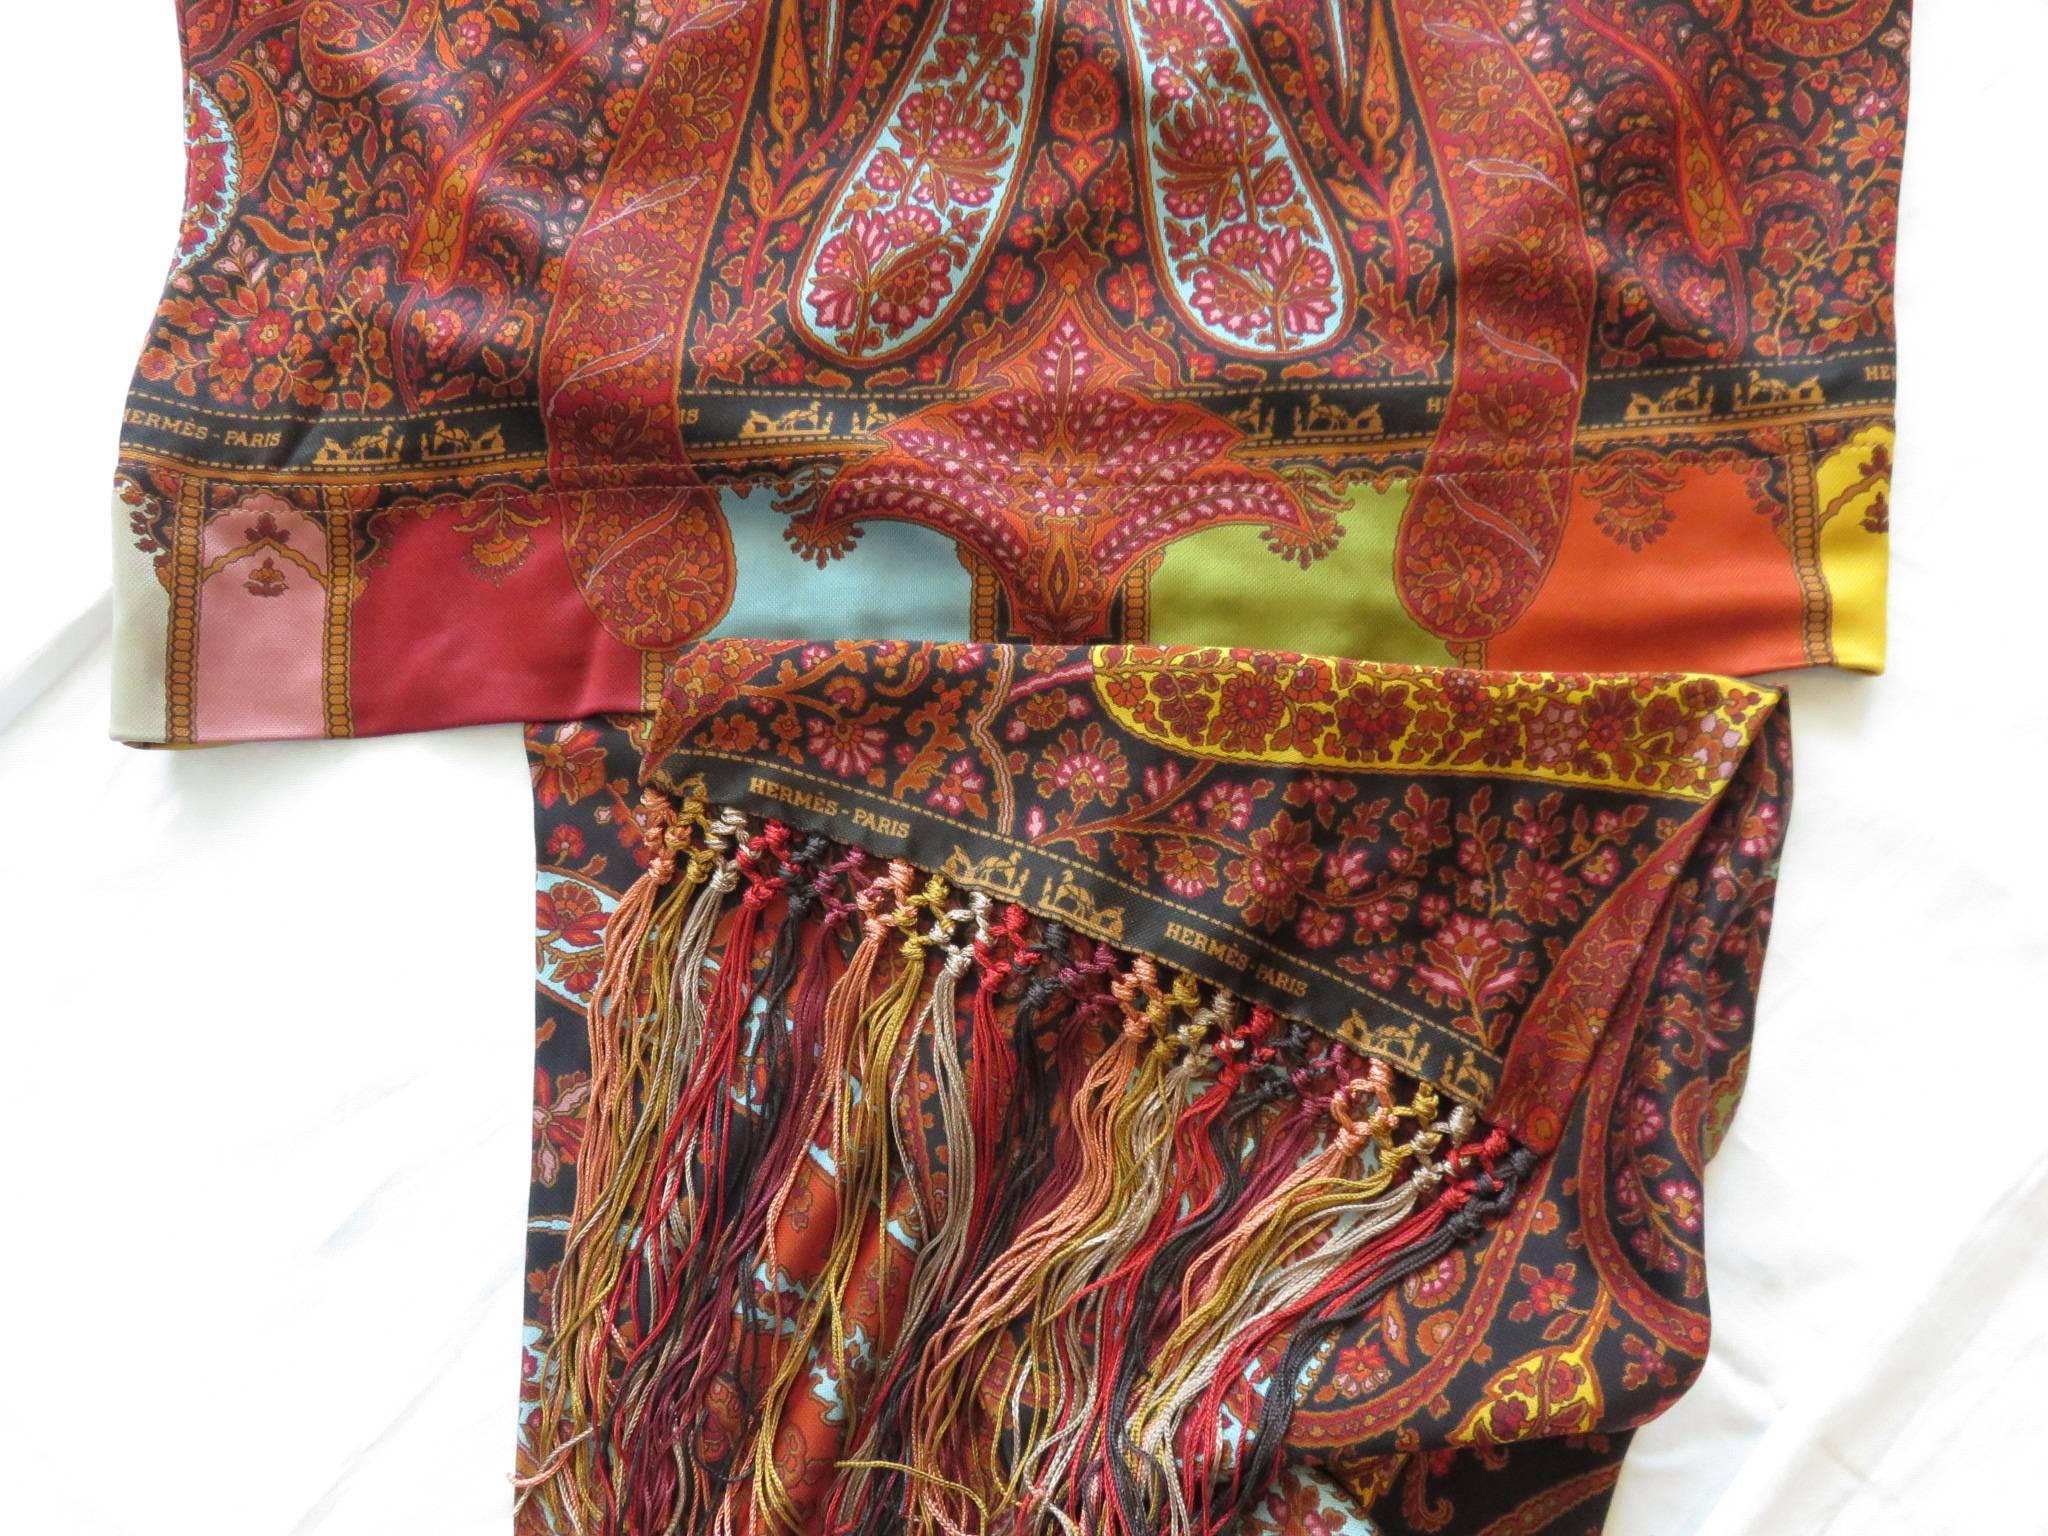 HERMES PARIS by Gaultier Paisley scarf dress 1